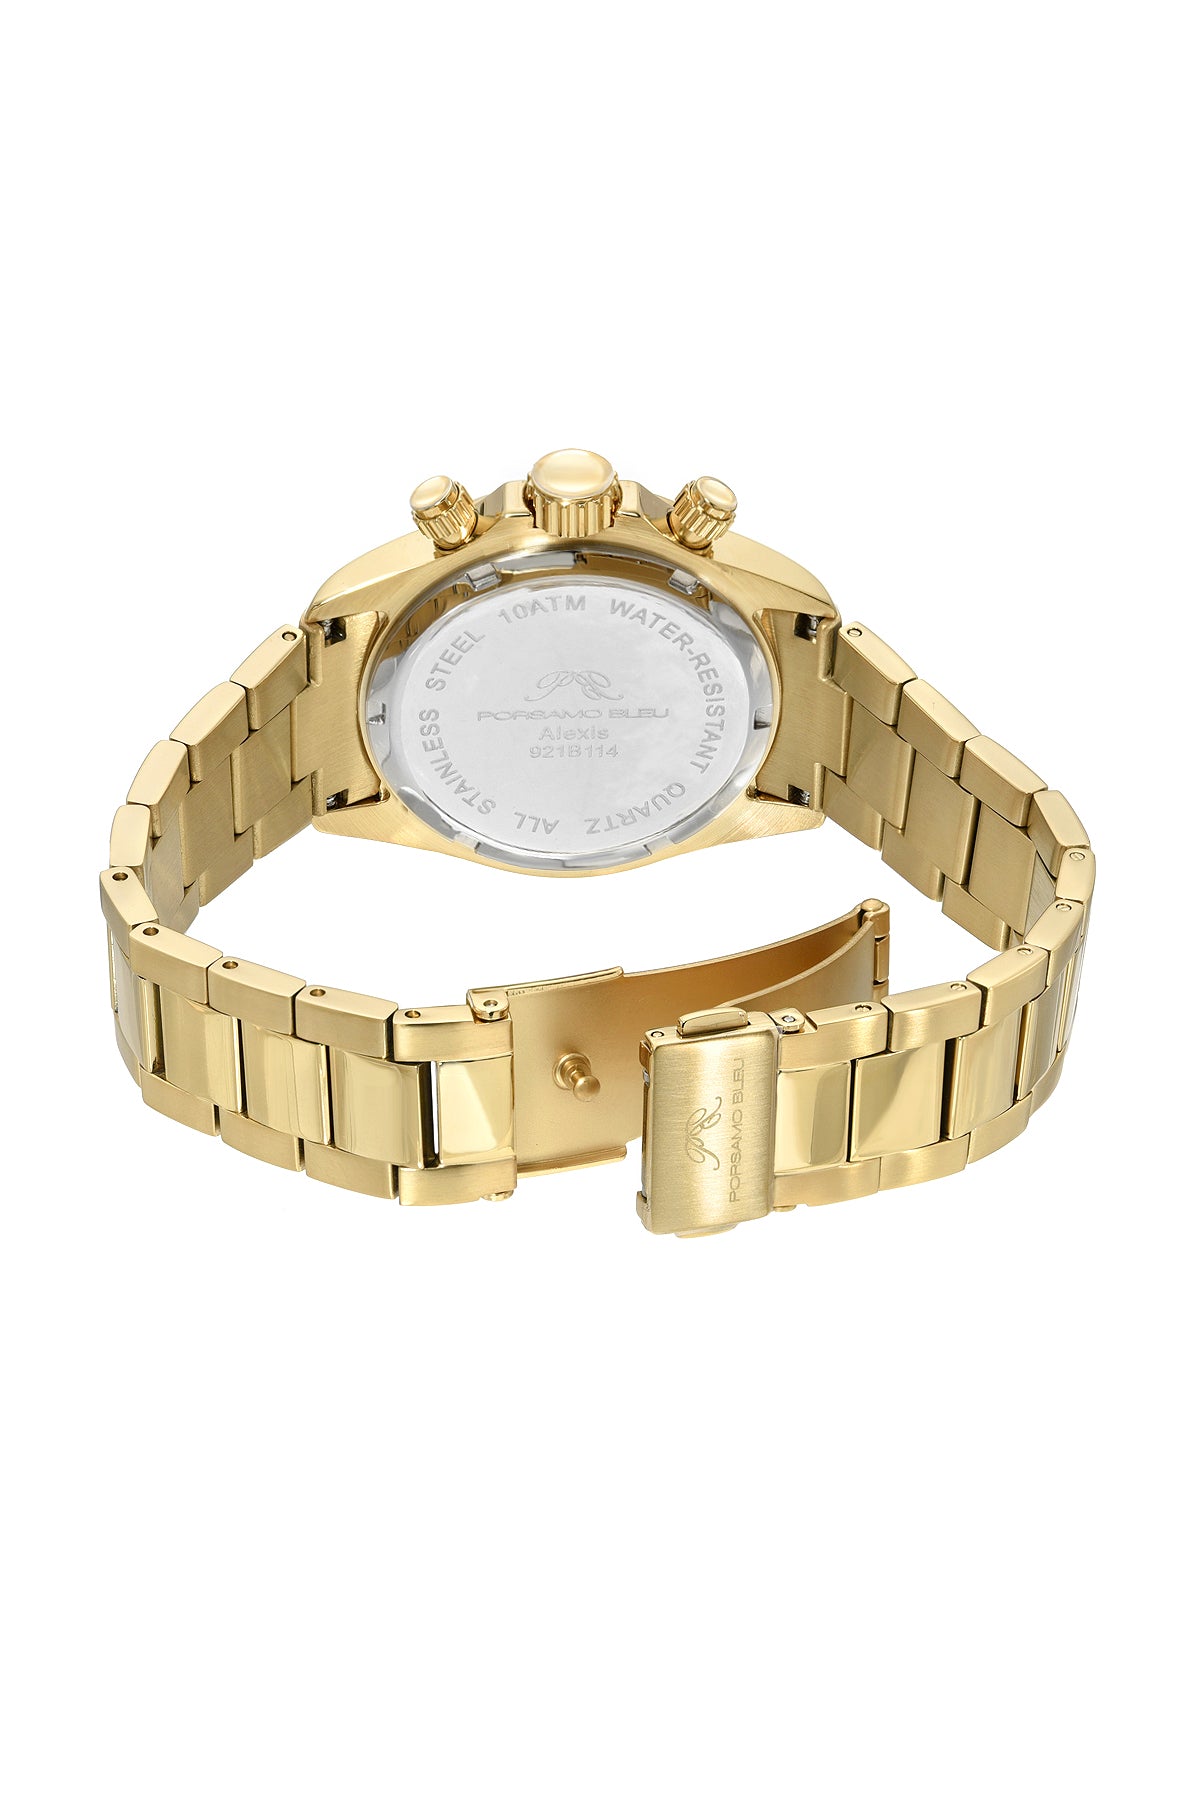 Porsamo Bleu Alexis Luxury Women's Watch Stainless Steel, Gold, White, 921BALS